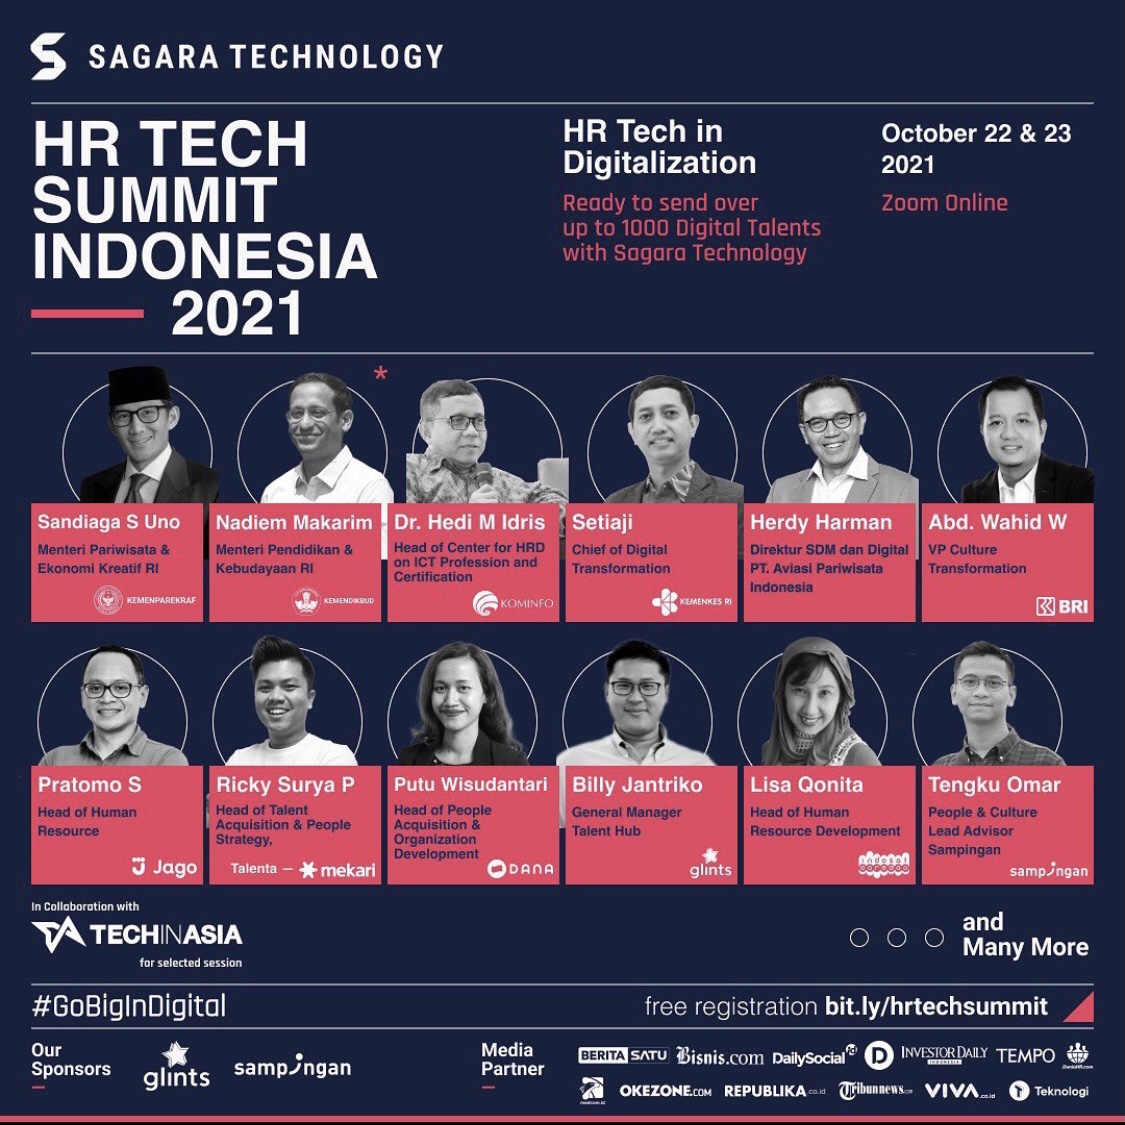 HR Tech Summit Indonesia 2021